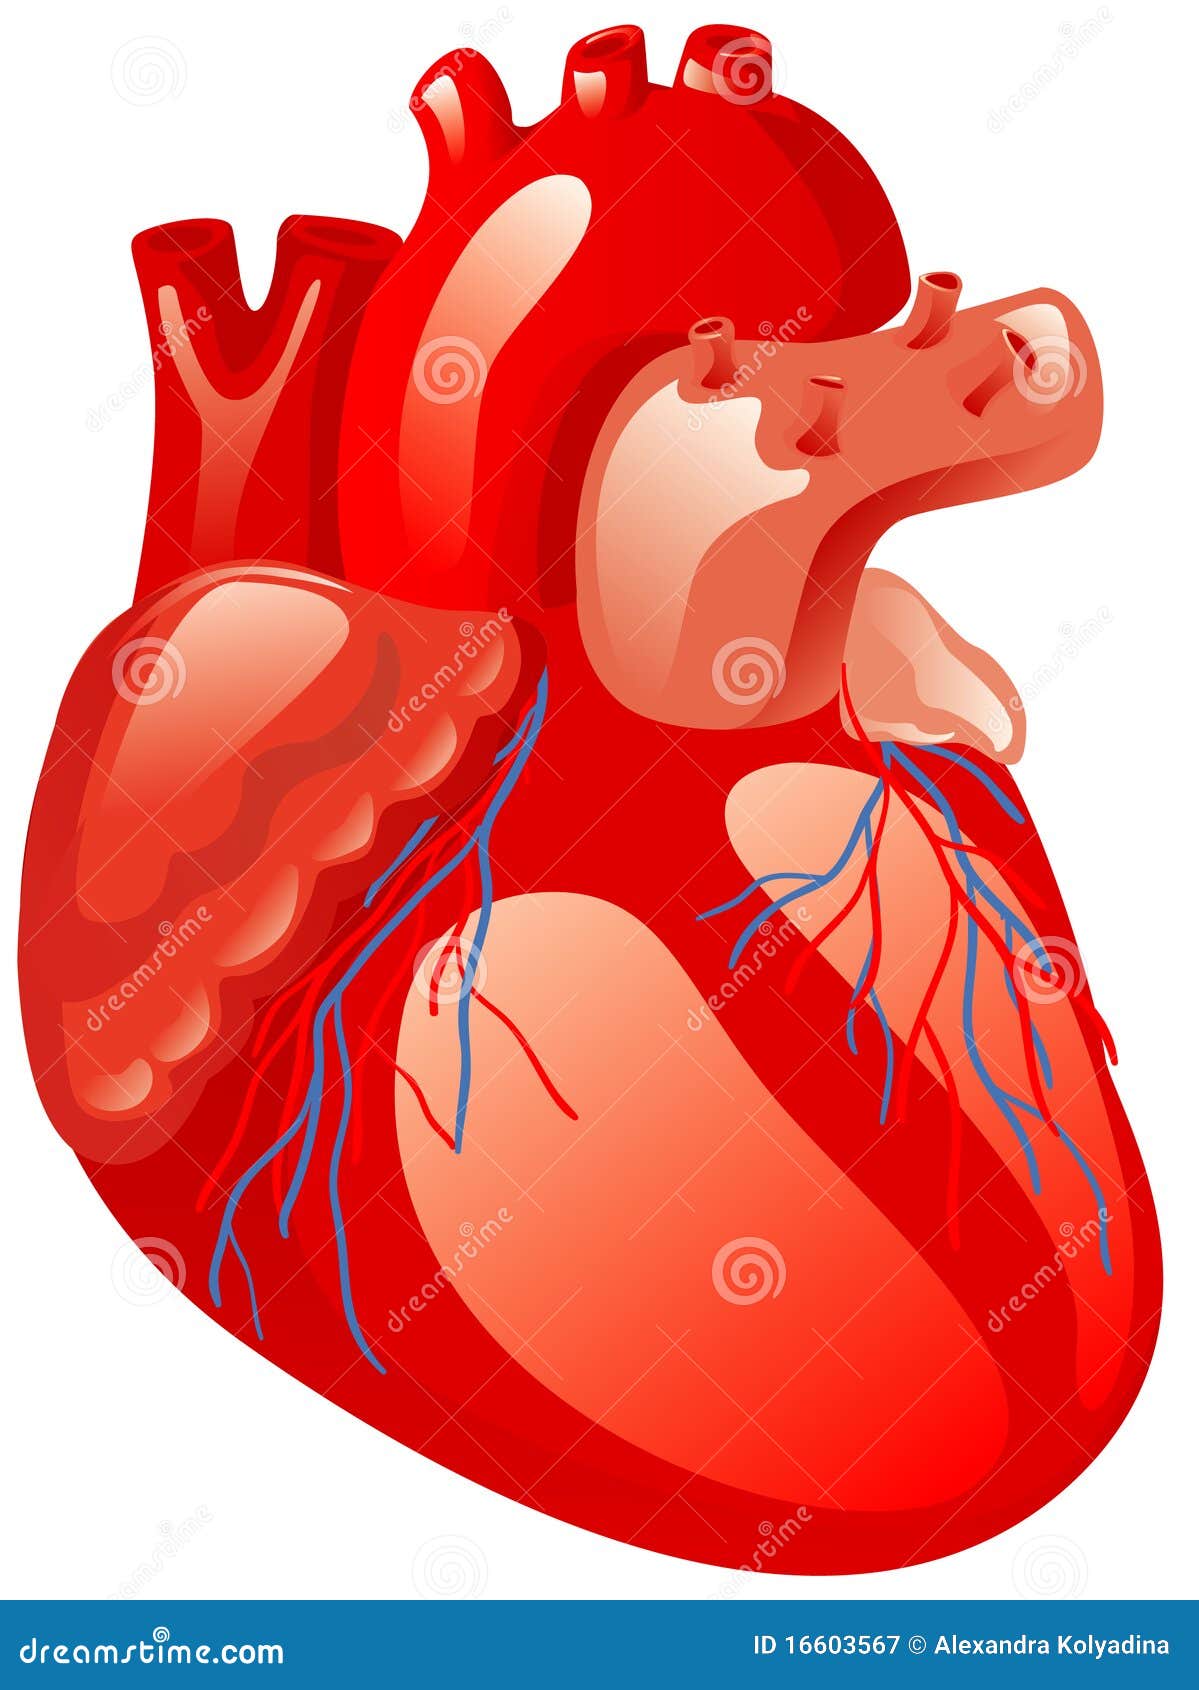 clipart of human heart - photo #7